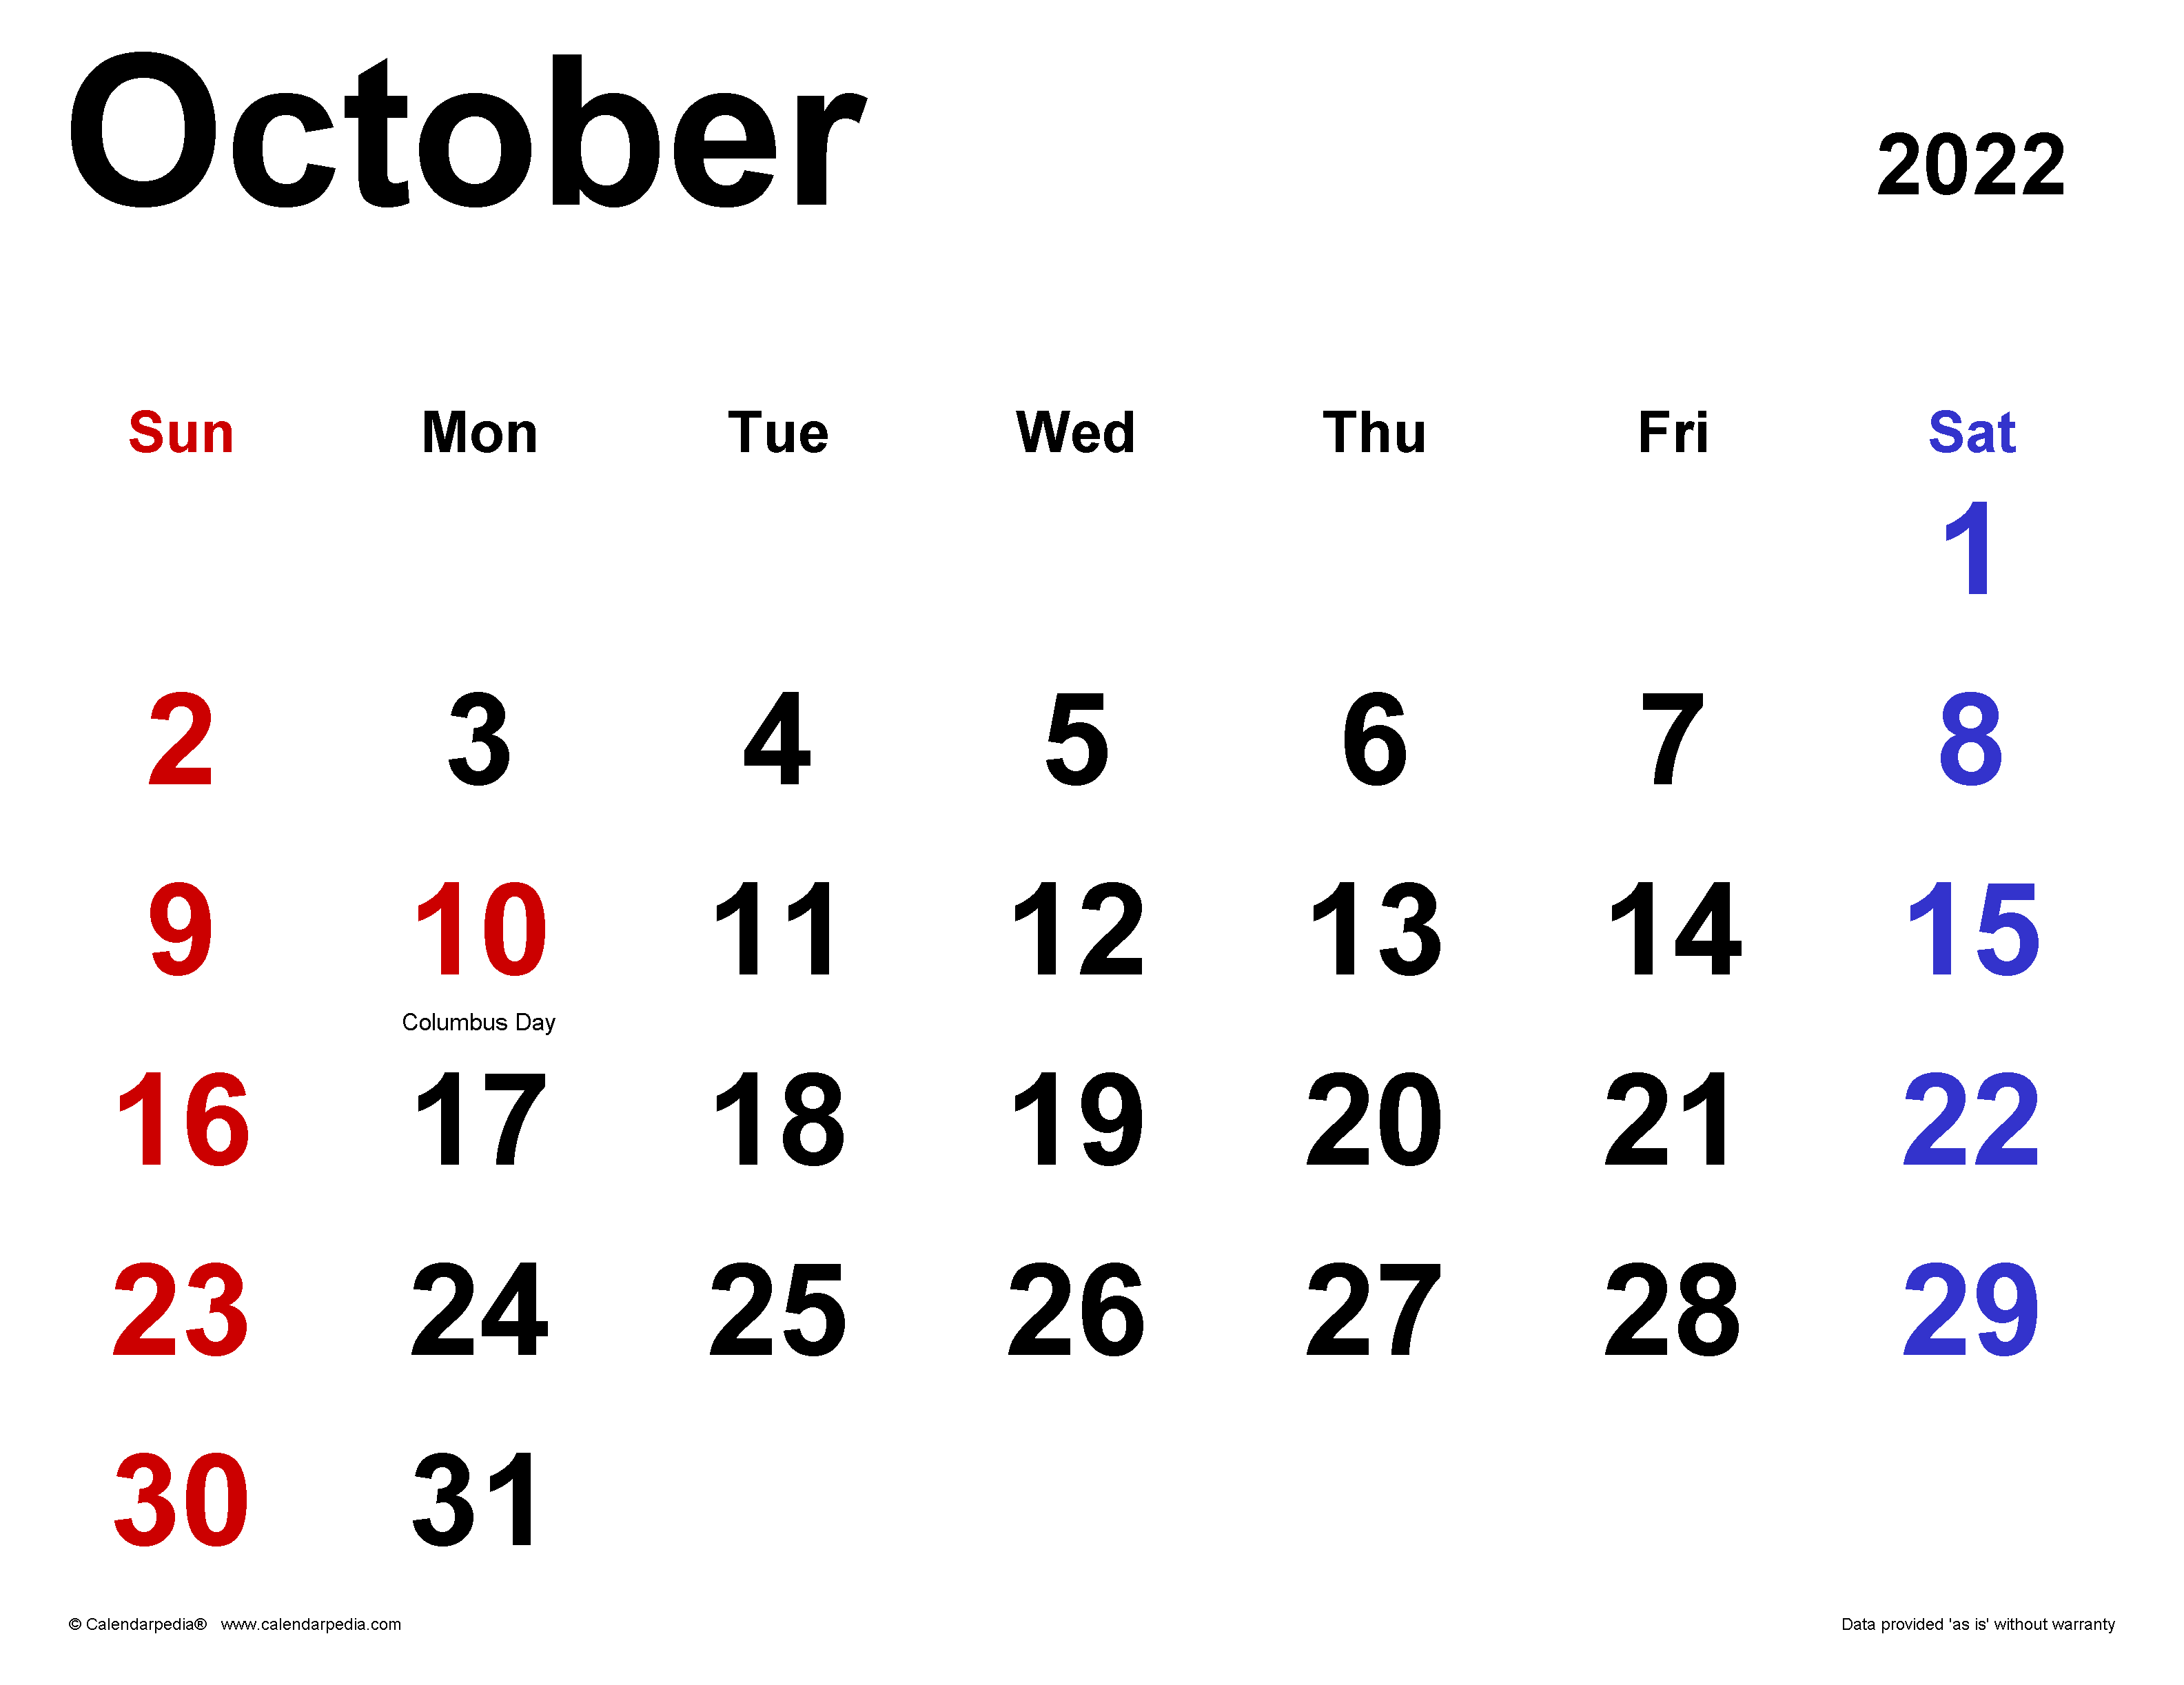 October 2022 Calendar Wallpapers Wallpaper Cave